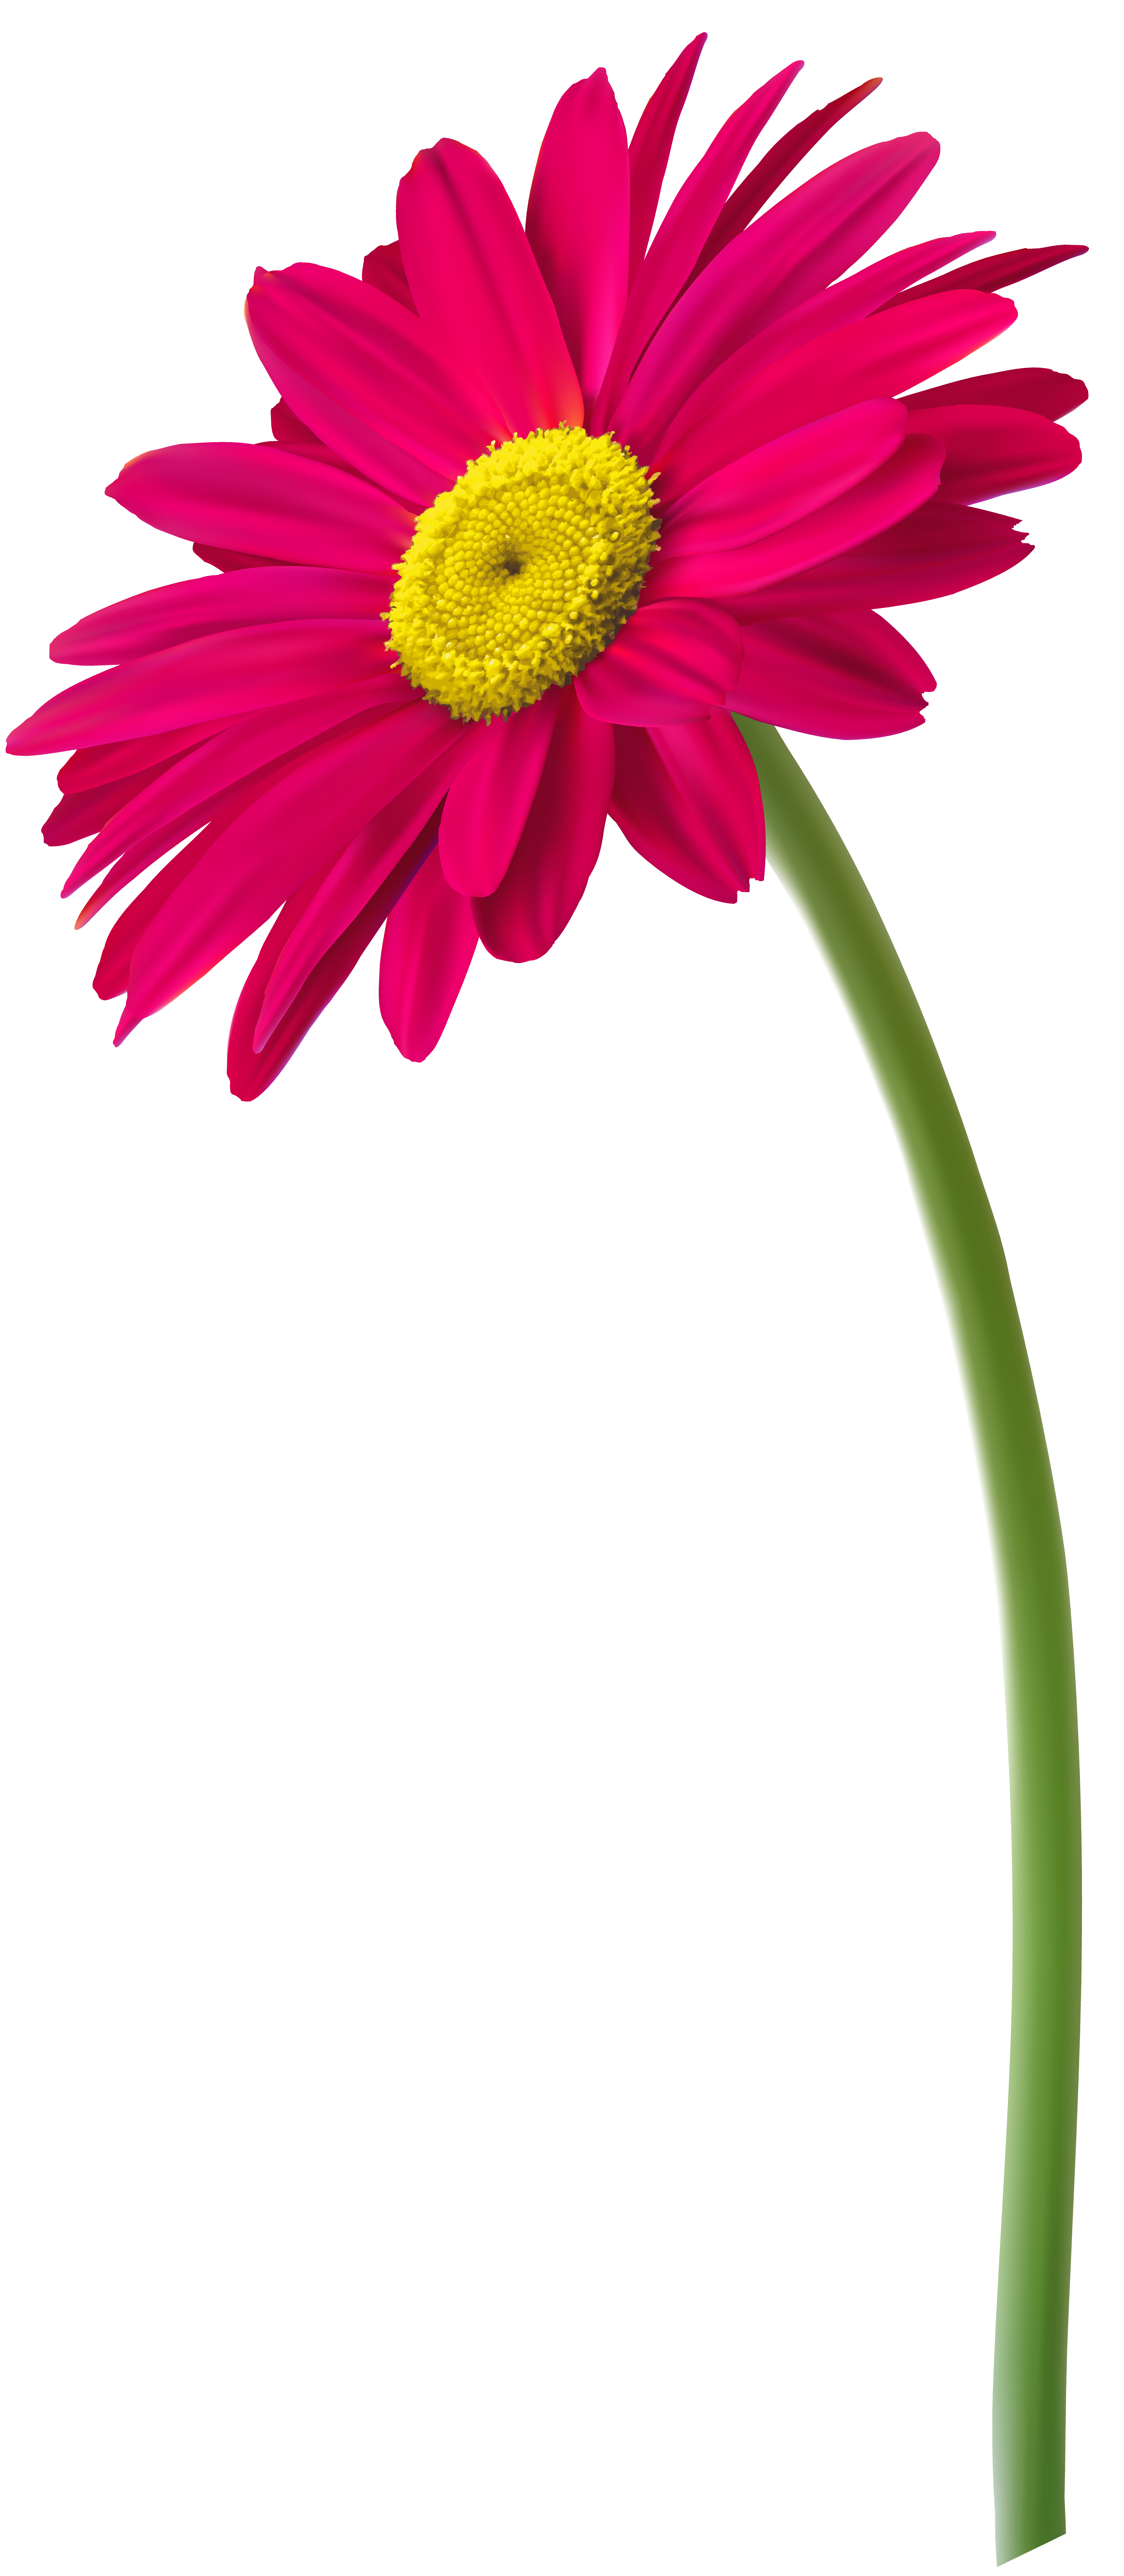 Pink Gerbera Flower PNG Clip Art Image.